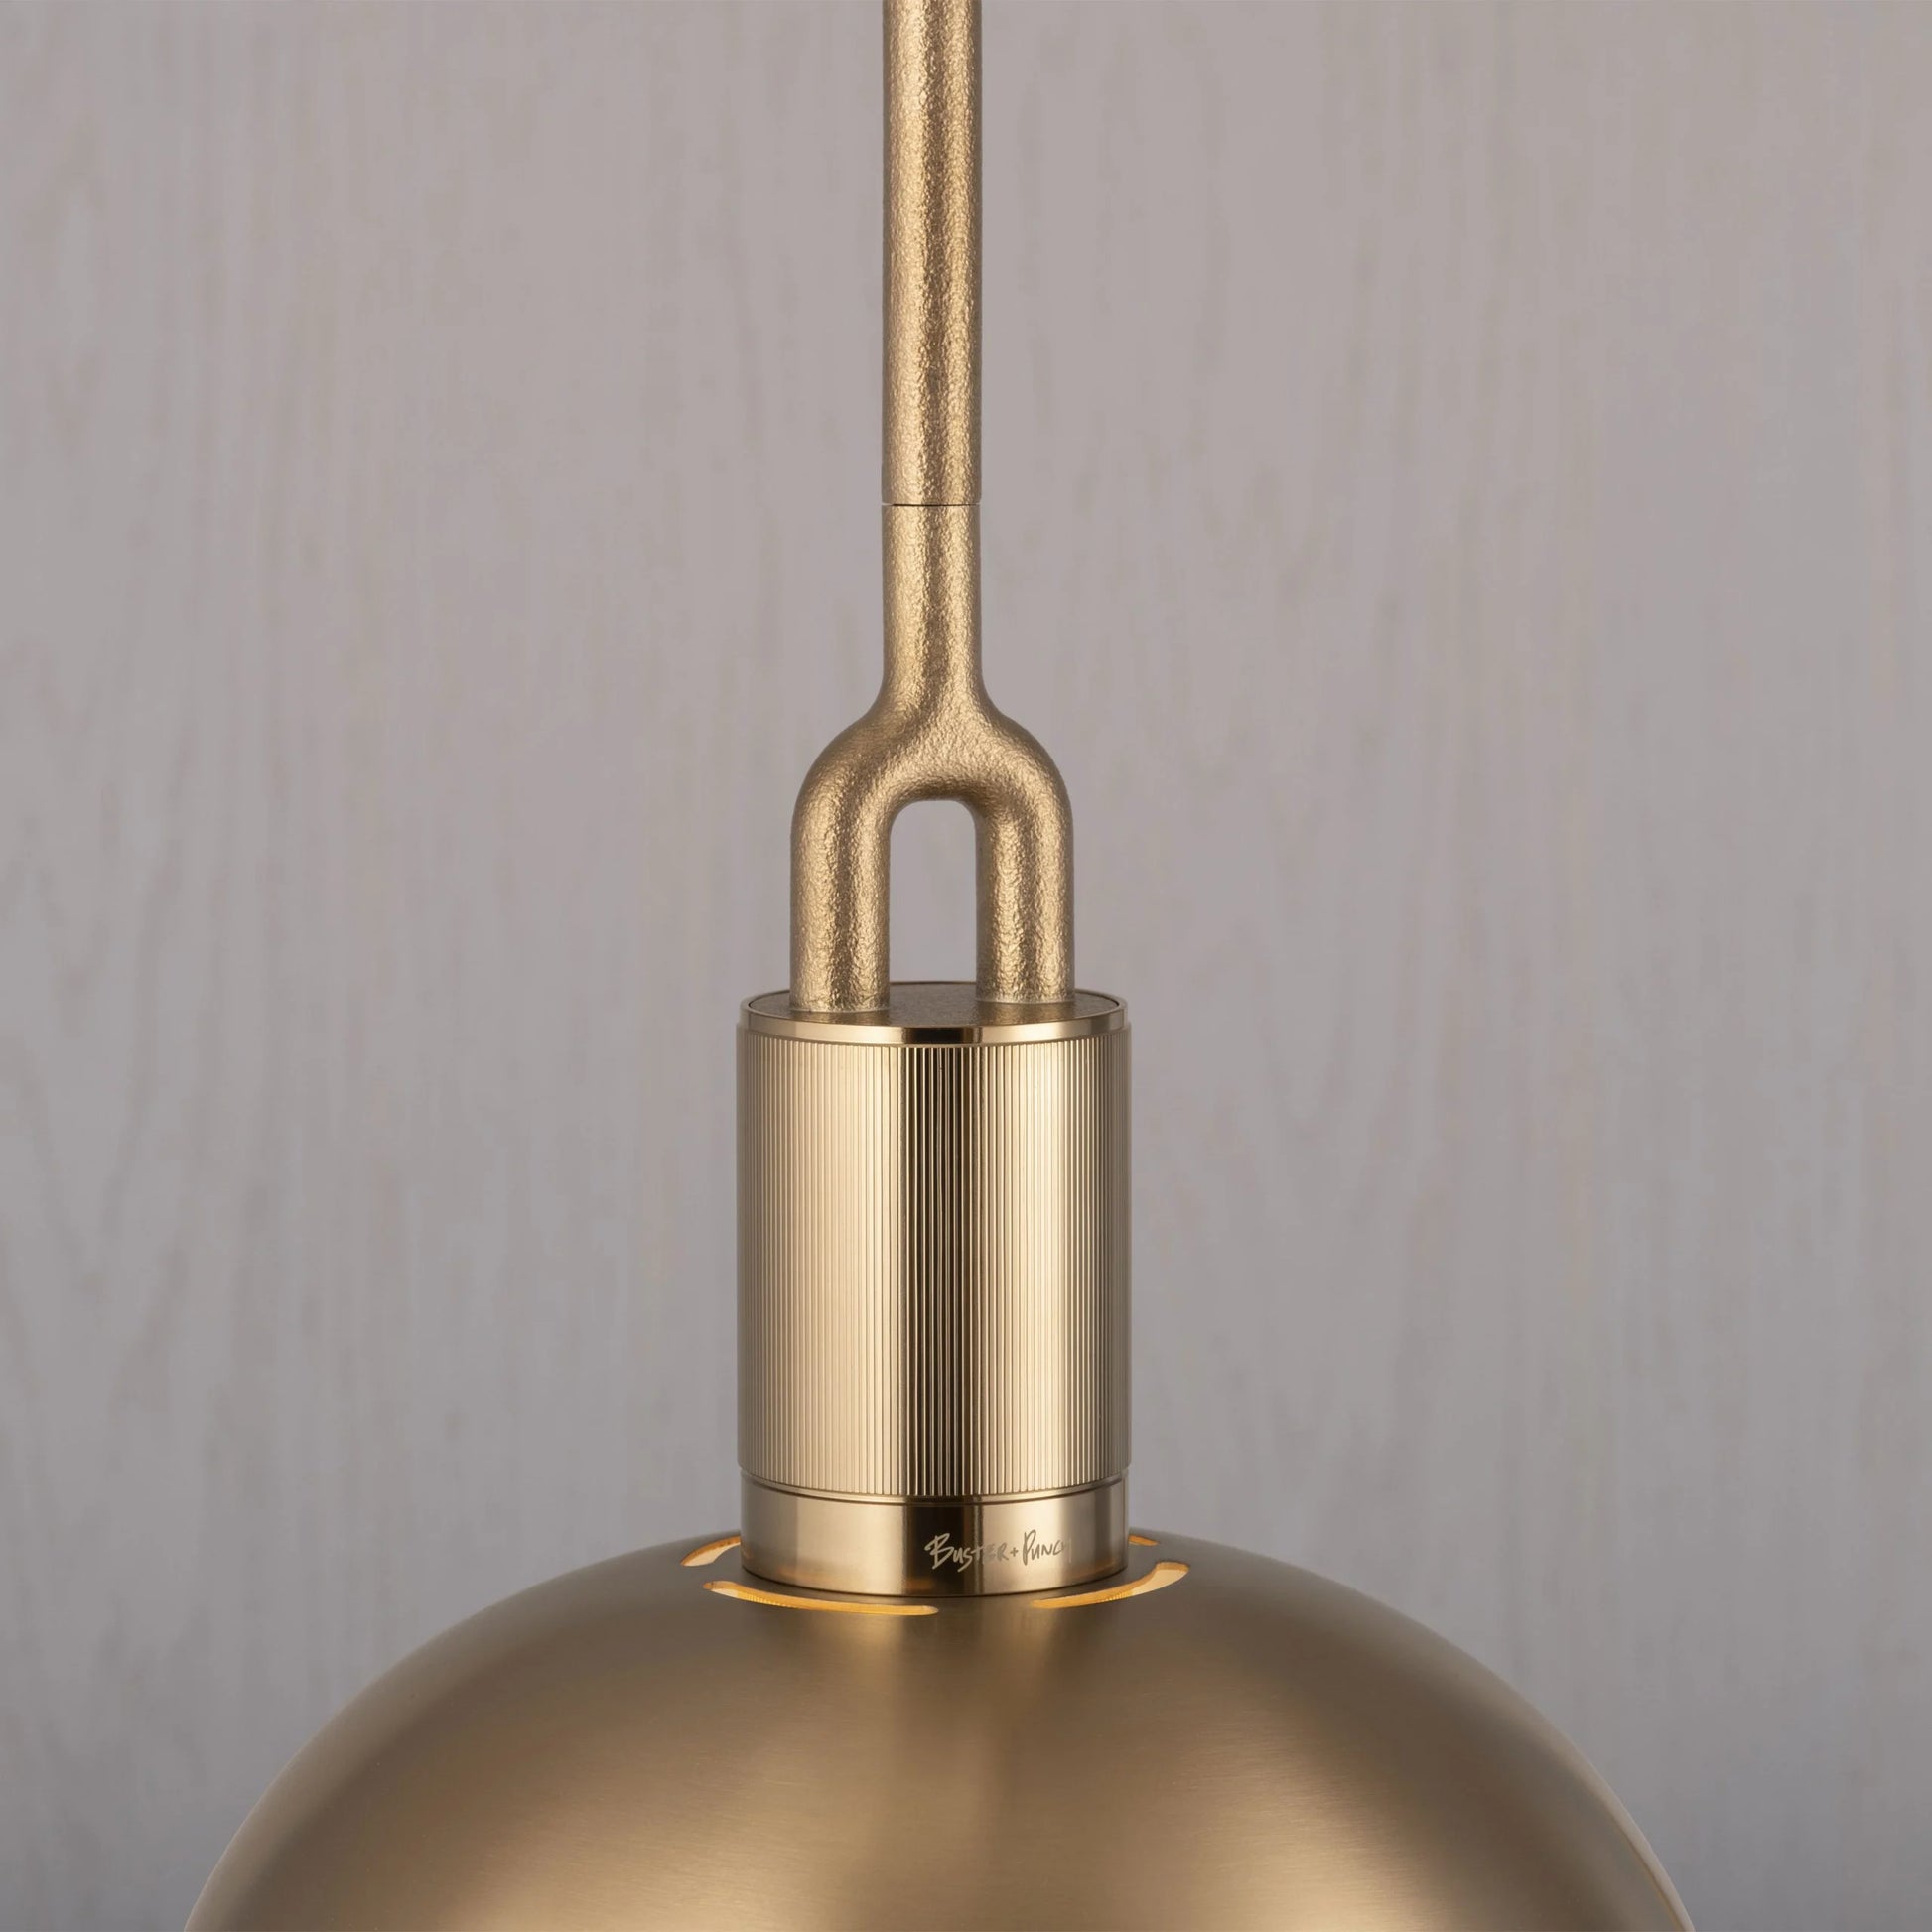 Forked Pendant Light / Shade / Medium brass, detailed close up of fork.